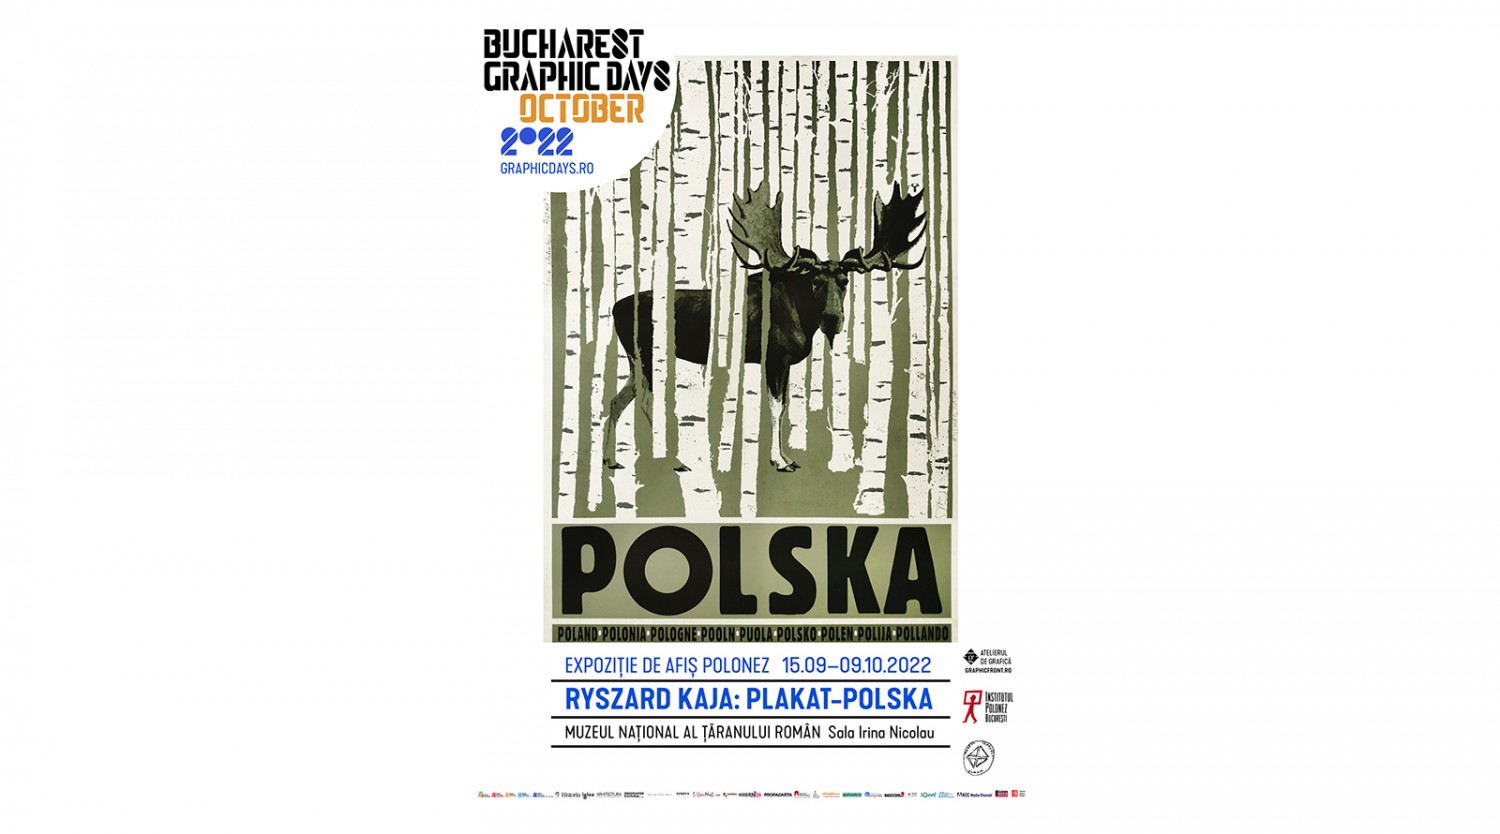 BUCHAREST GRAPHIC DAYS Ryszard Kaja:Plakat-Polska/Expozitie de afis polonez